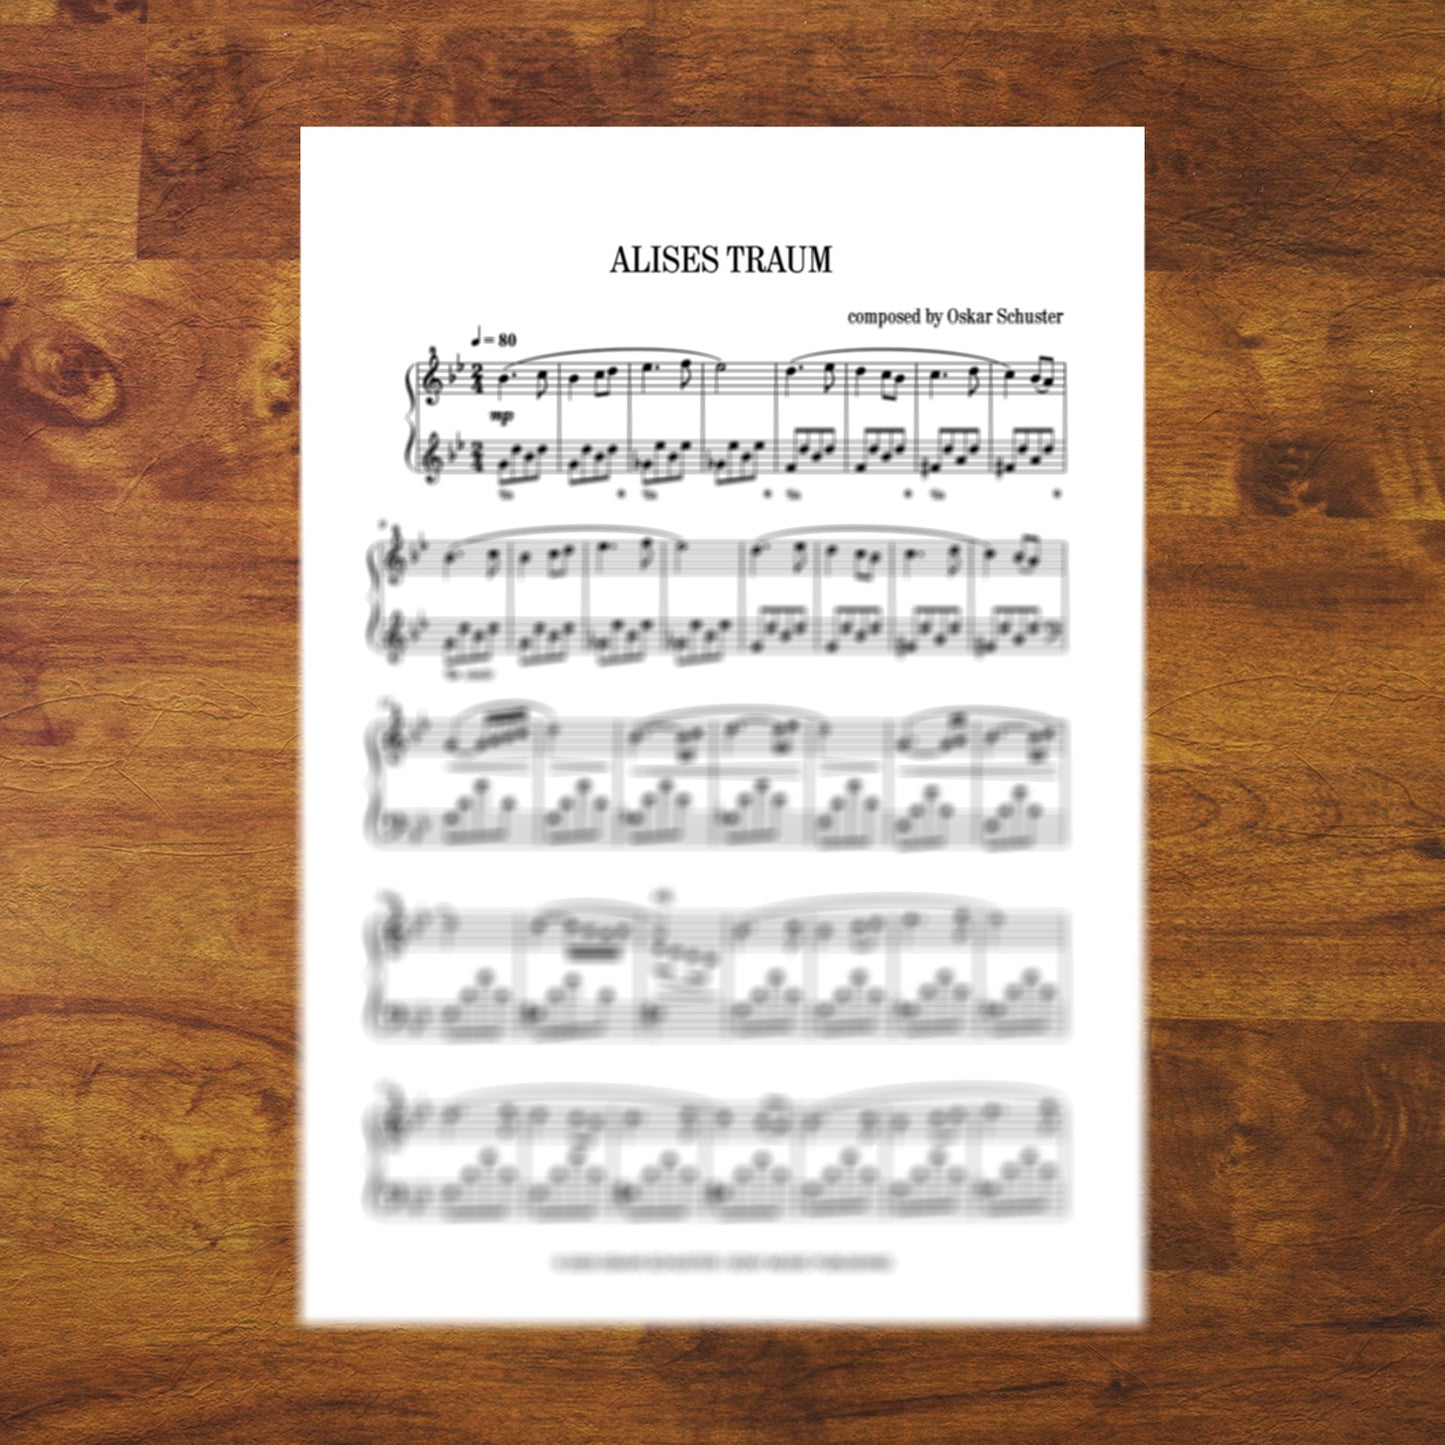 Piano Sheets "Alises Traum"